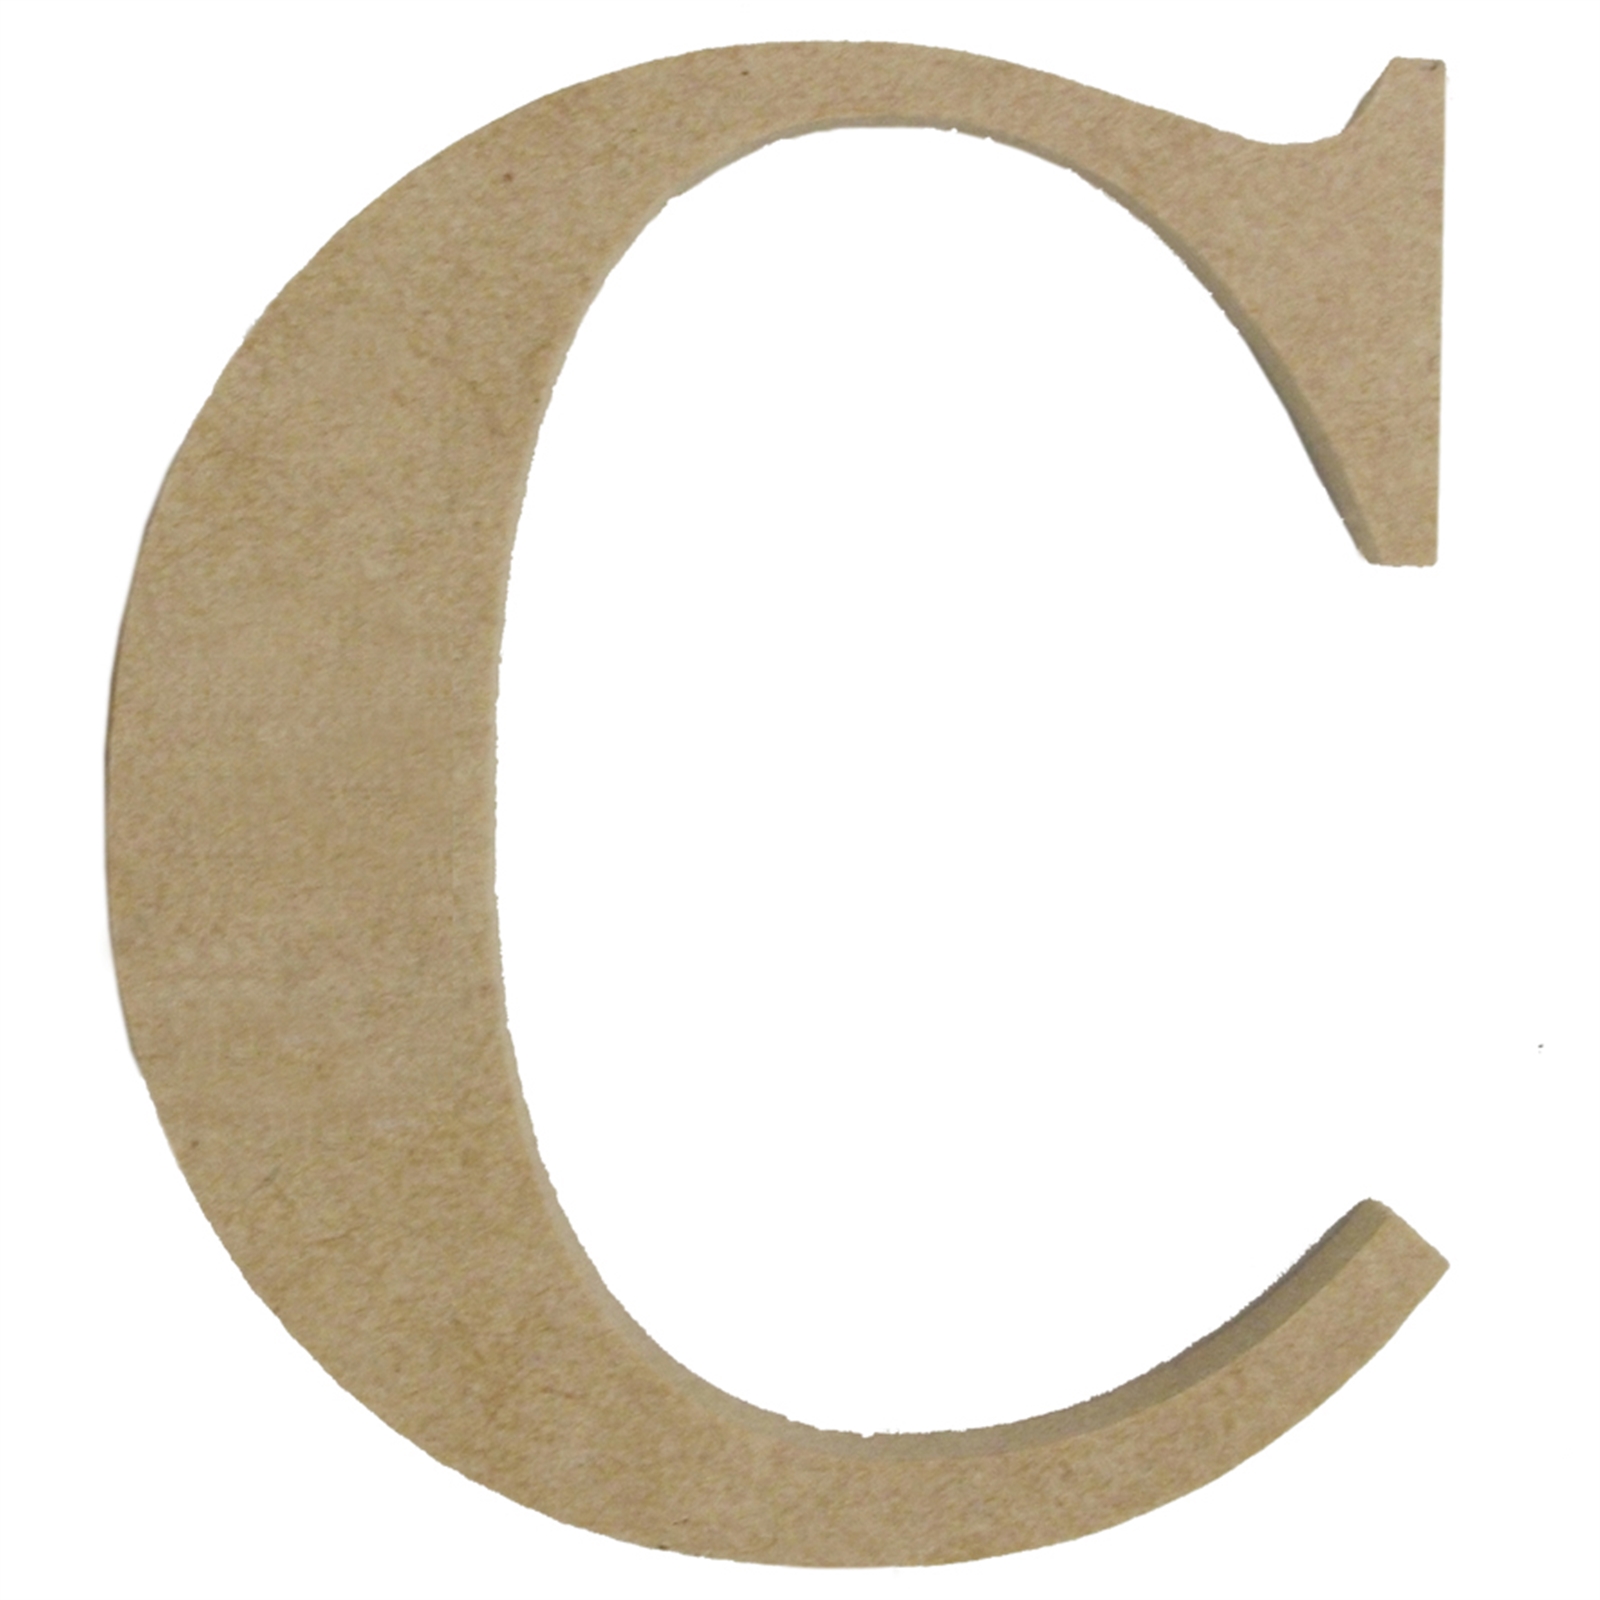 Boyle Medium Craftwood Letter C